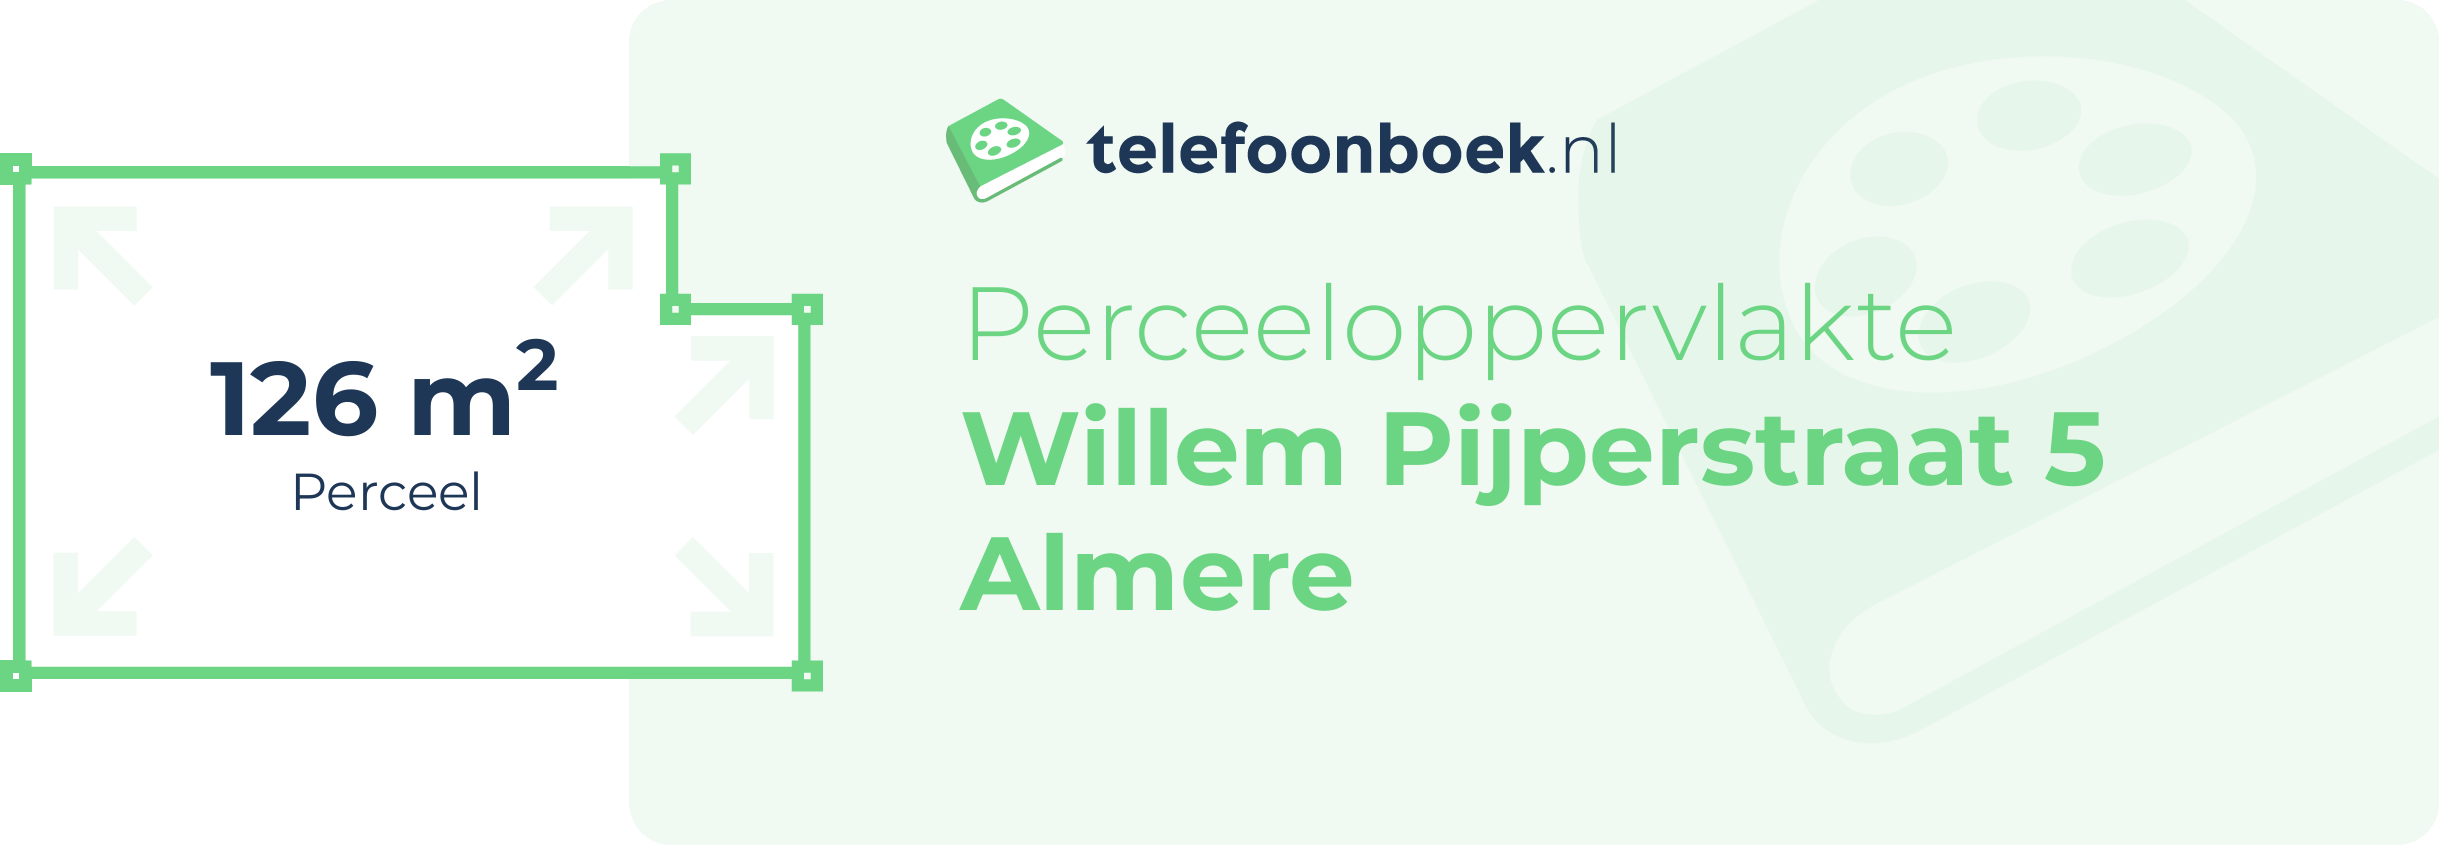 Perceeloppervlakte Willem Pijperstraat 5 Almere